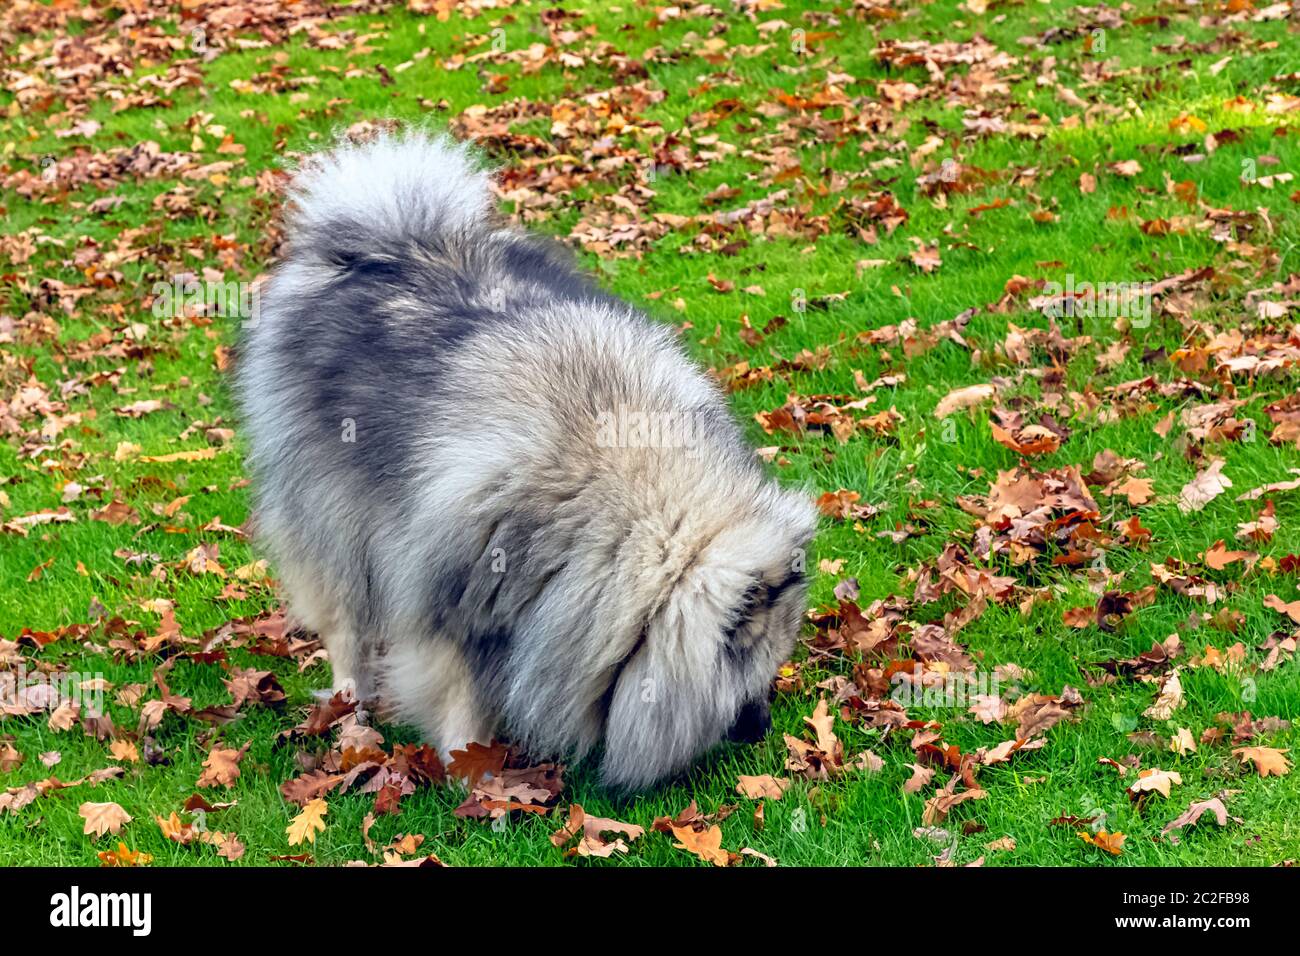 Medium size dog hi-res stock photography and images - Alamy